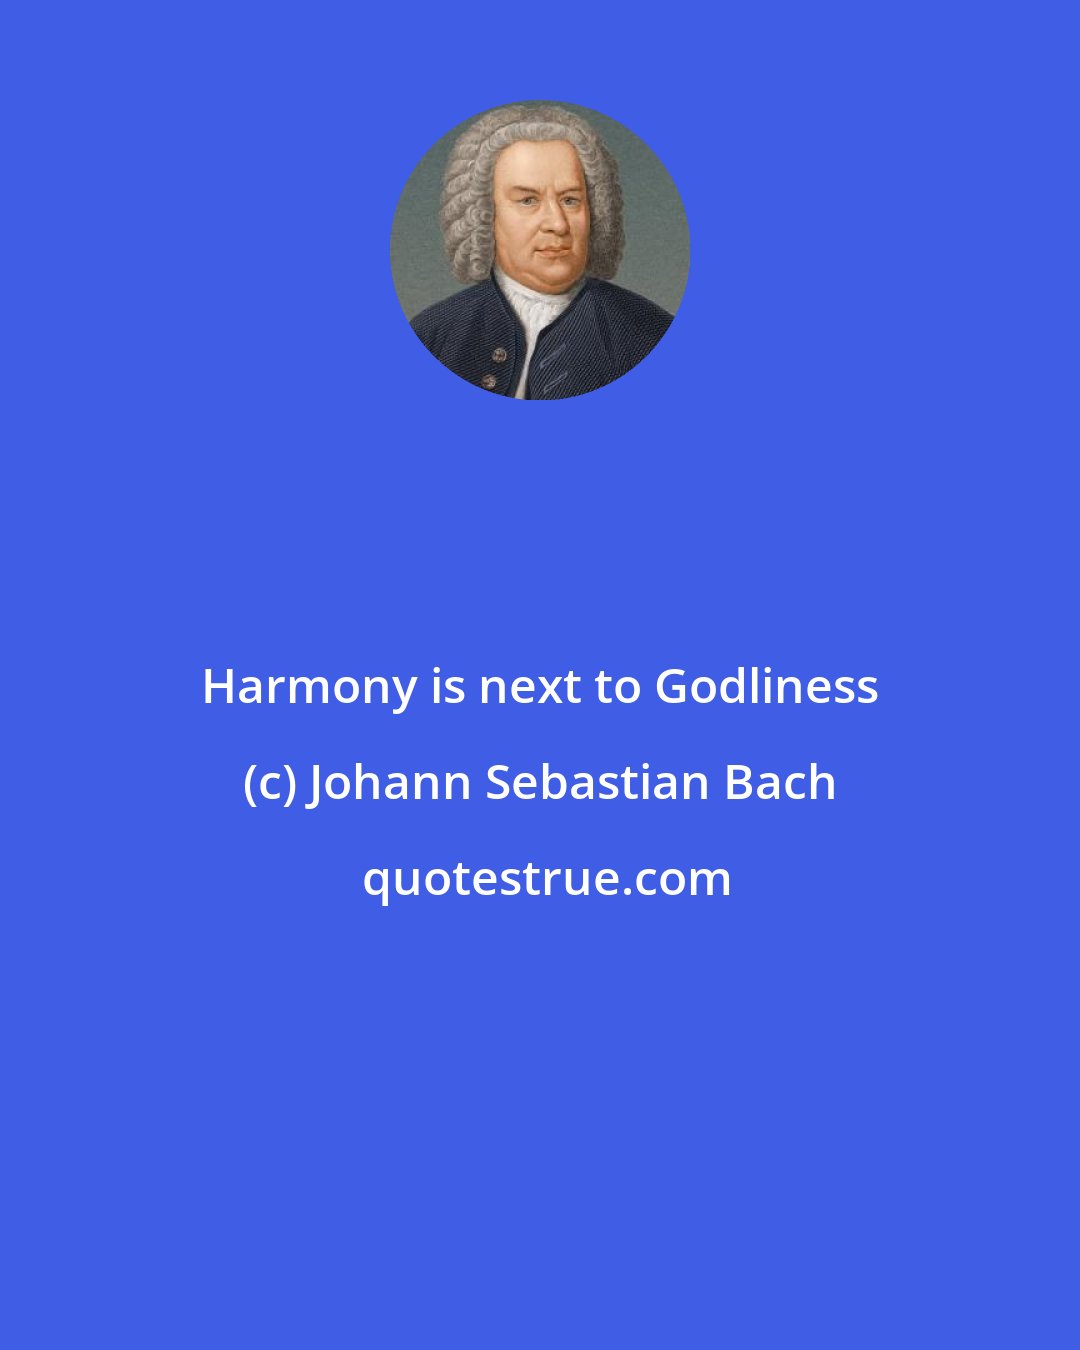 Johann Sebastian Bach: Harmony is next to Godliness